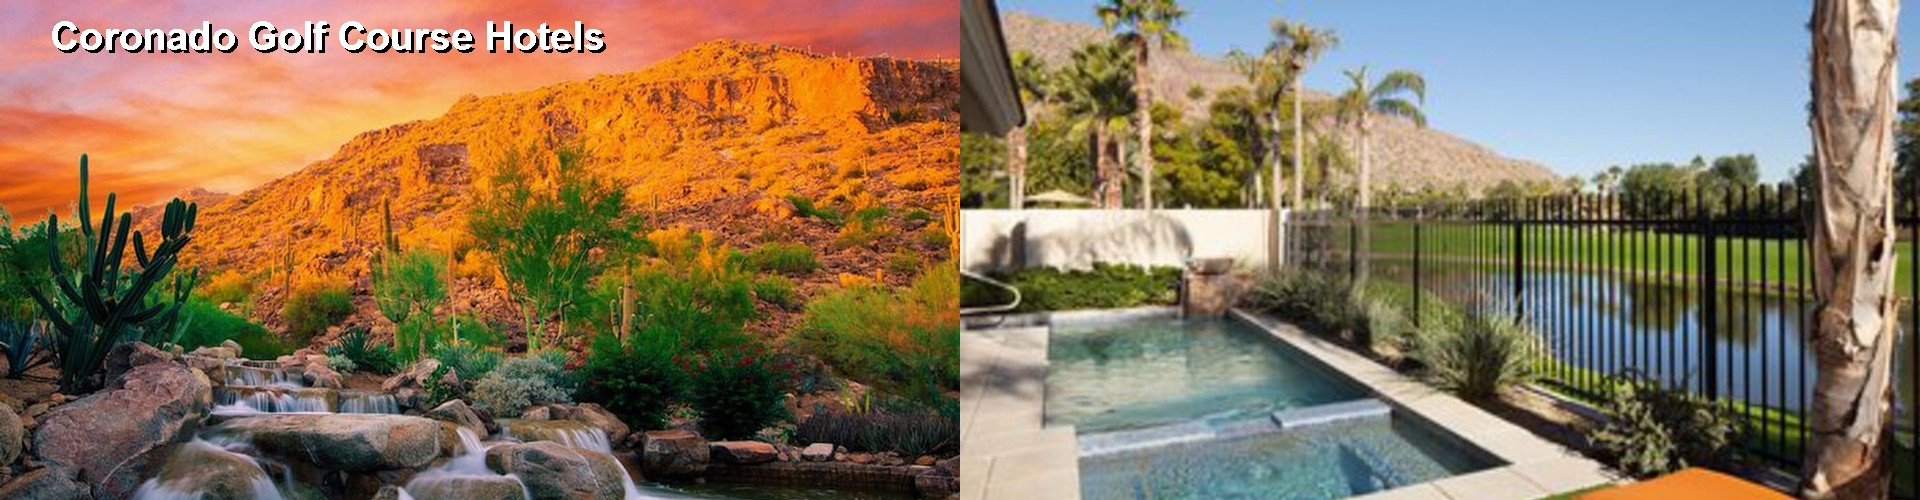 3 Best Hotels near Coronado Golf Course